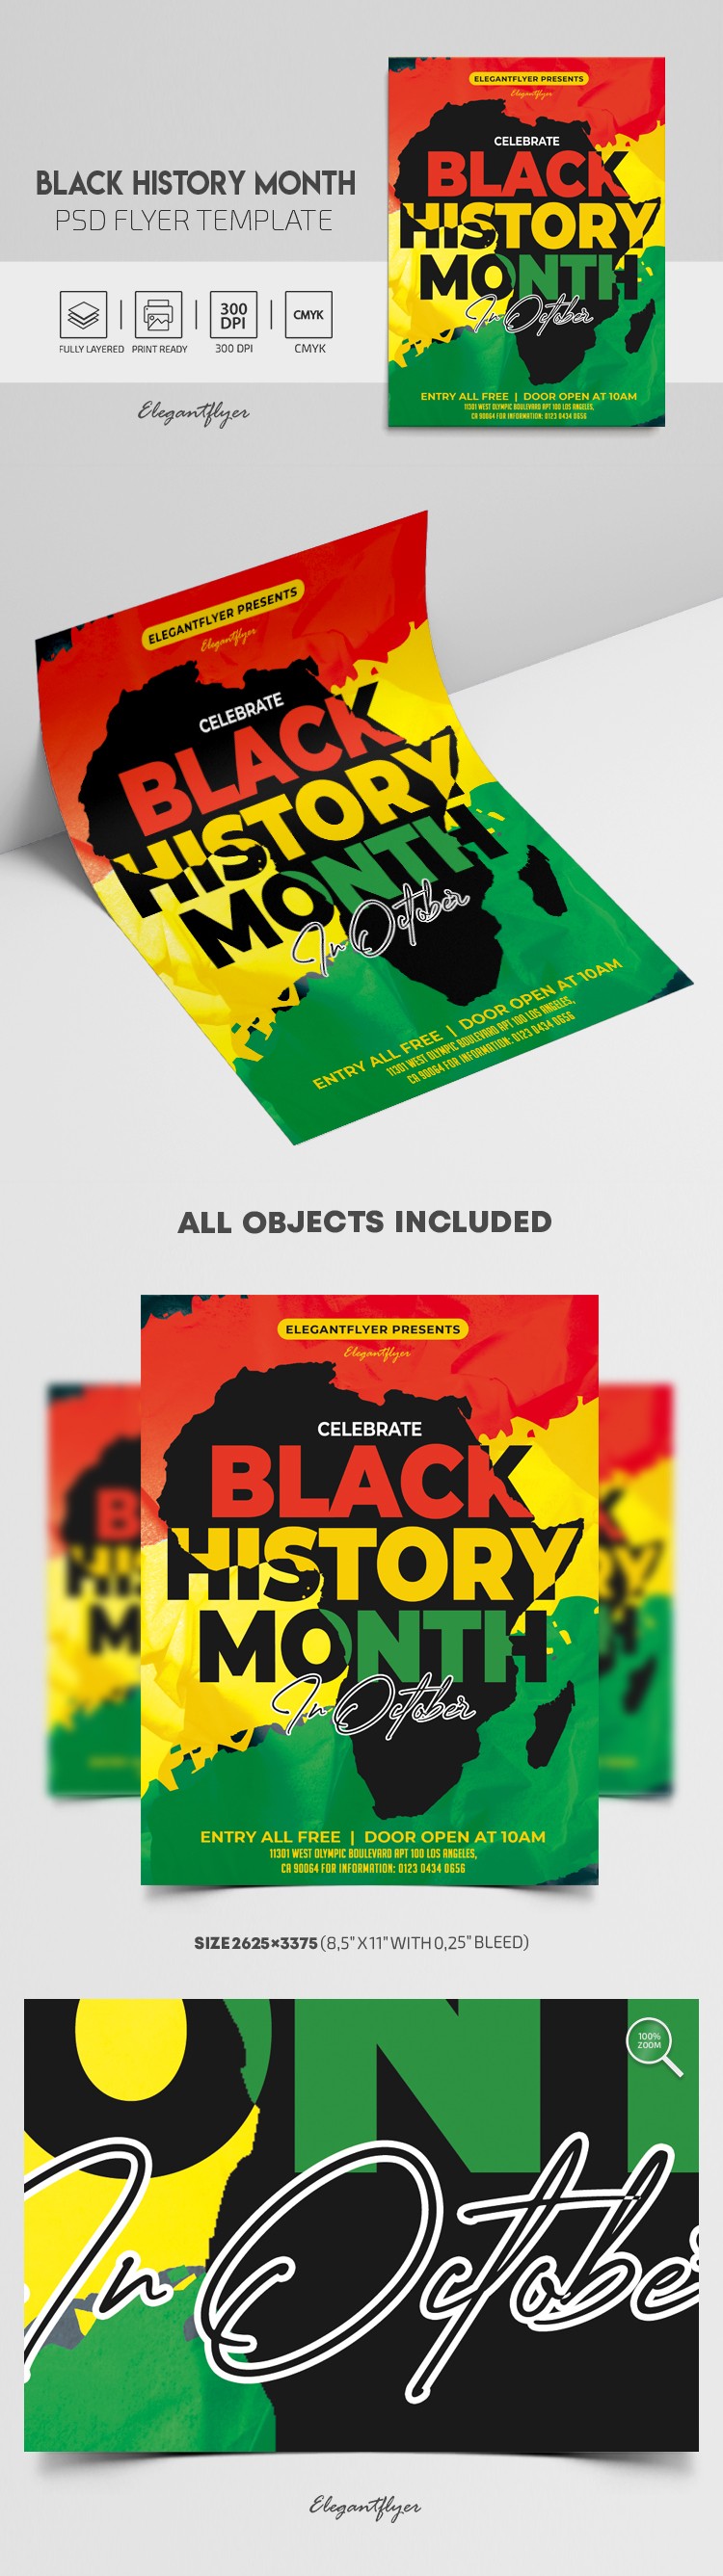 Black History Month Flyer by ElegantFlyer